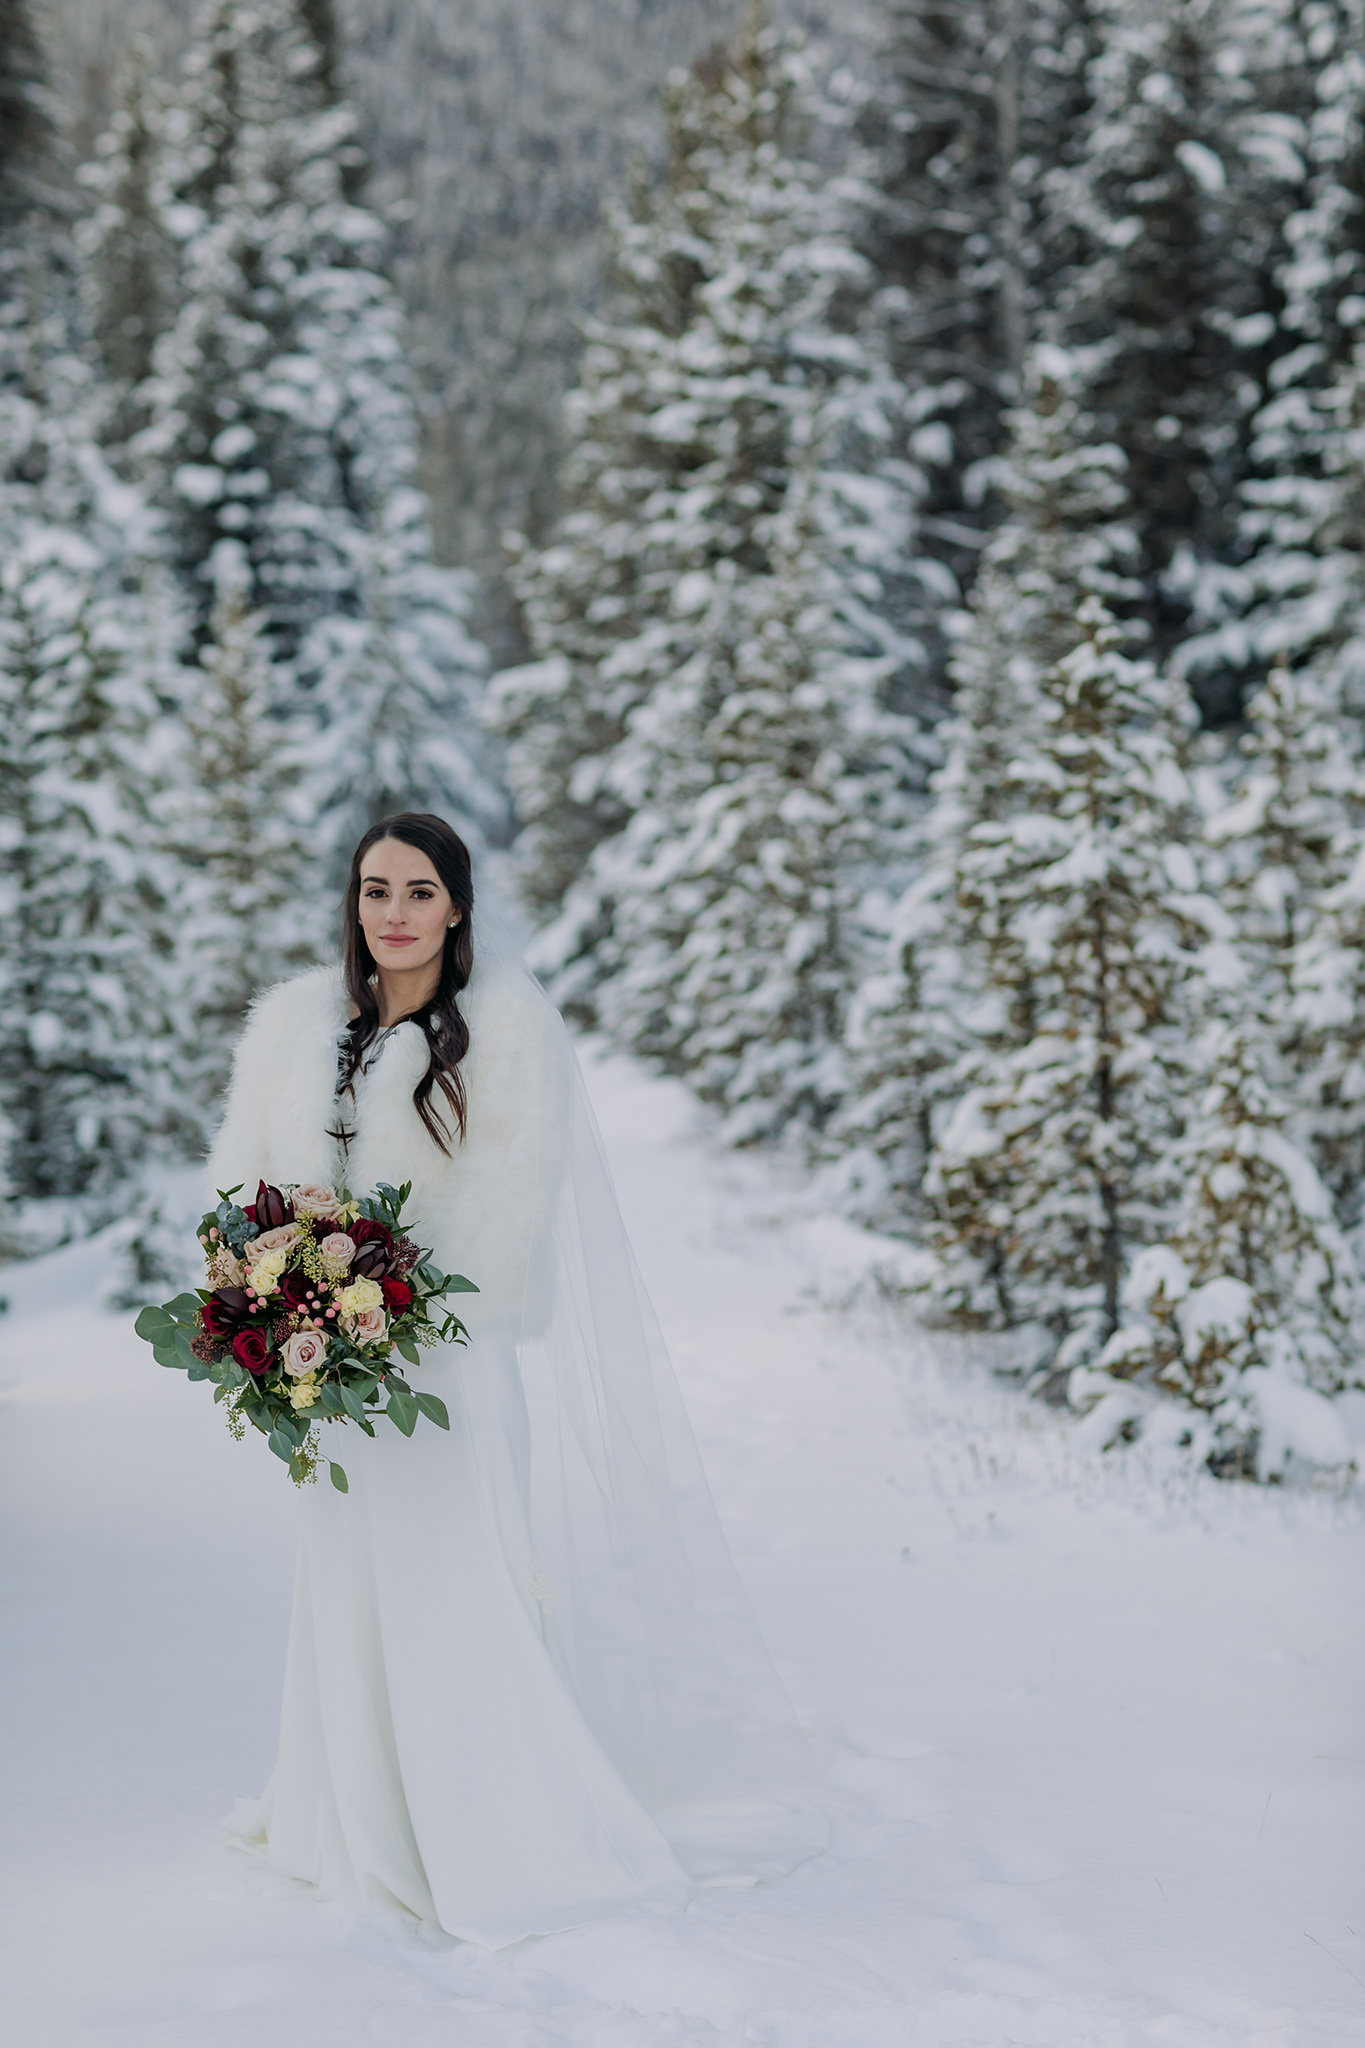 Upper Bankhead Banff mountain bride photos in the snow